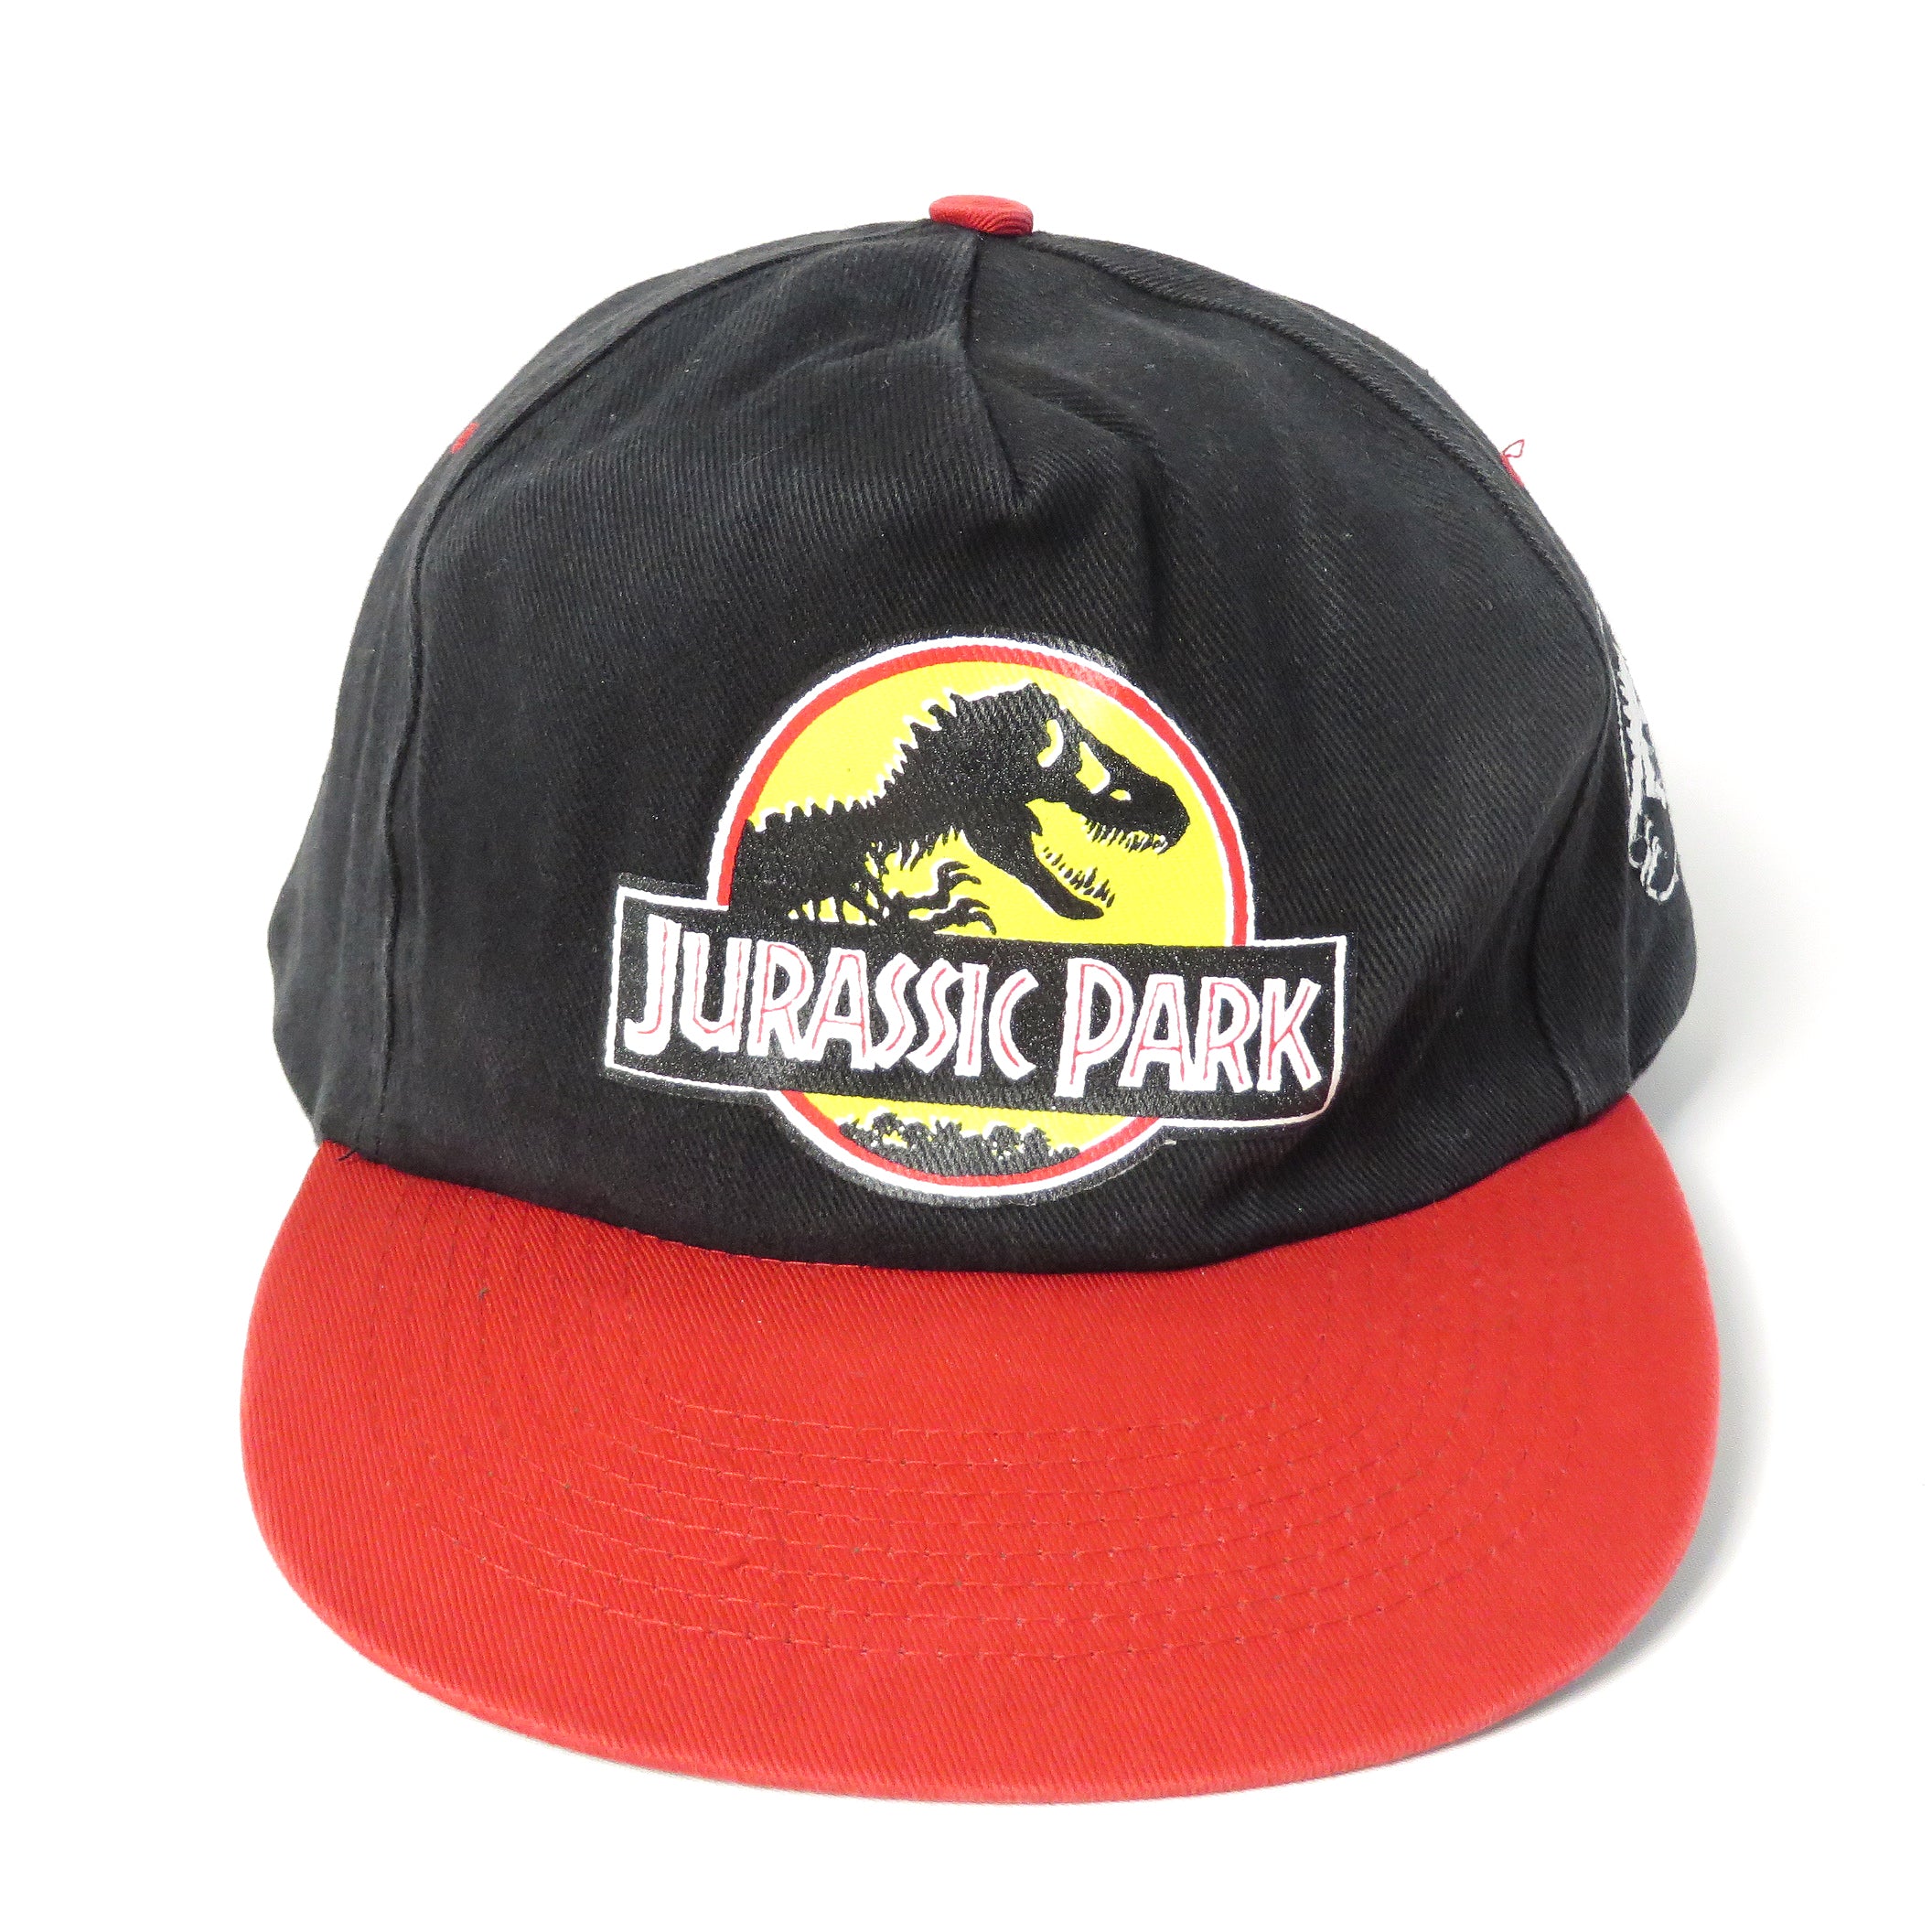 Vintage Jurassic Park Snapback Hat